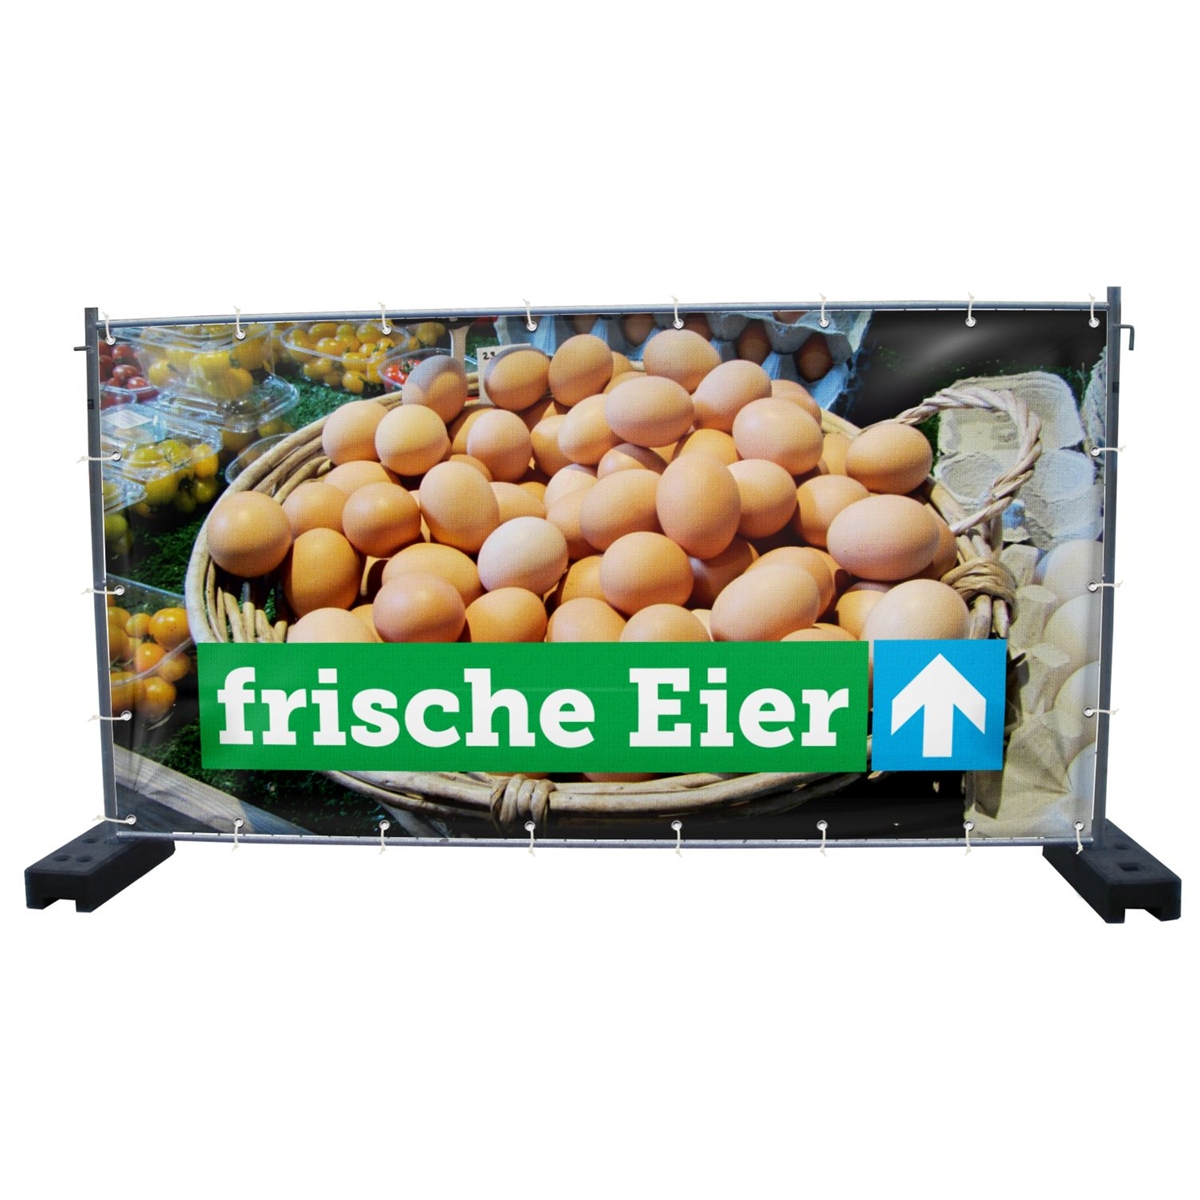 340 x 173 cm | Frische Eier Bauzaunbanner (3220)